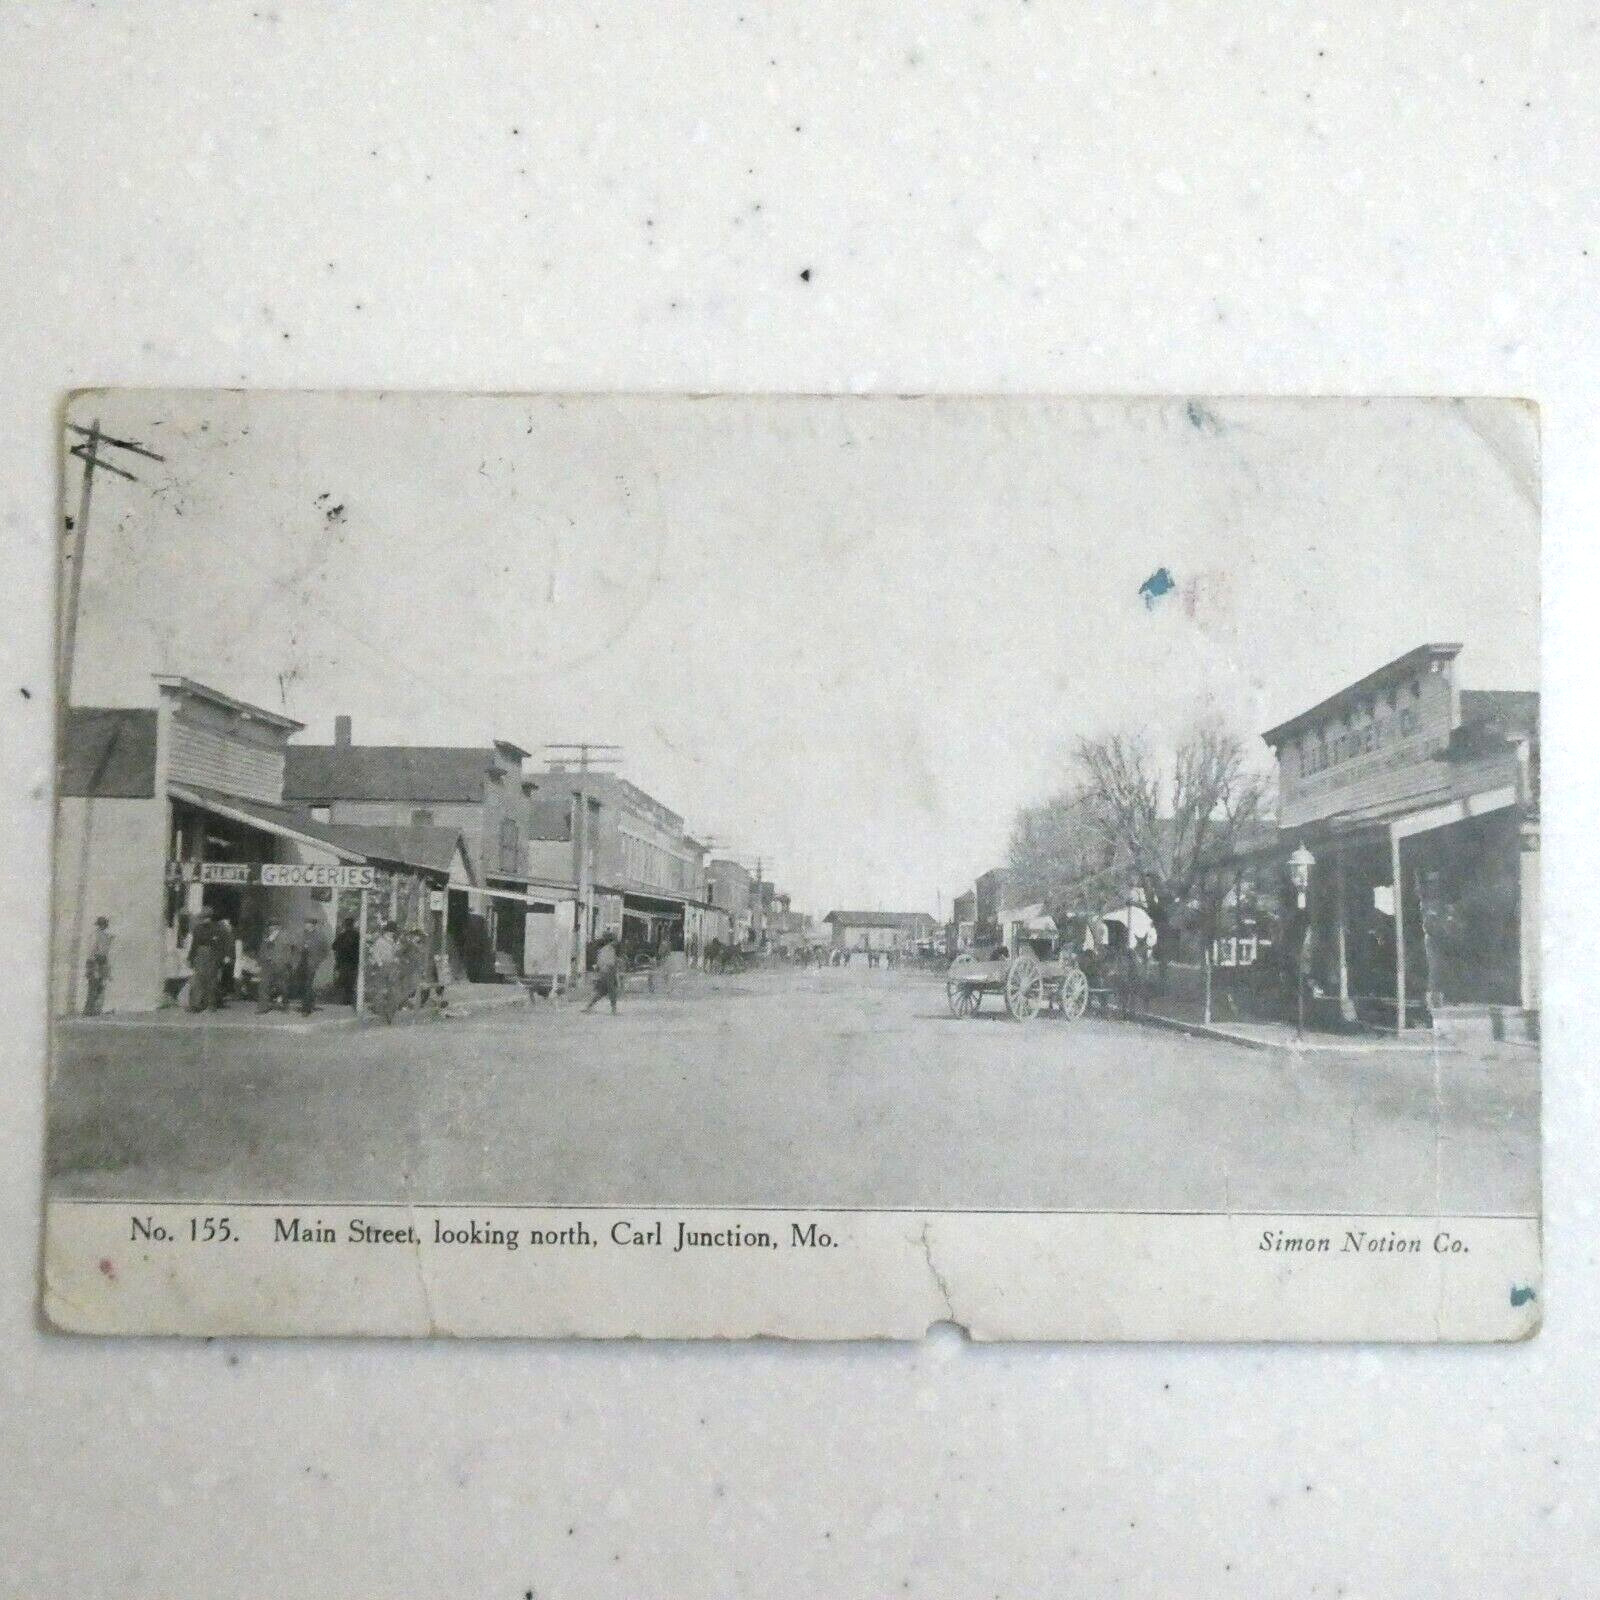 C1844 Antique Postcard Main Street Looking North Carl Junction Missouri MO 1909